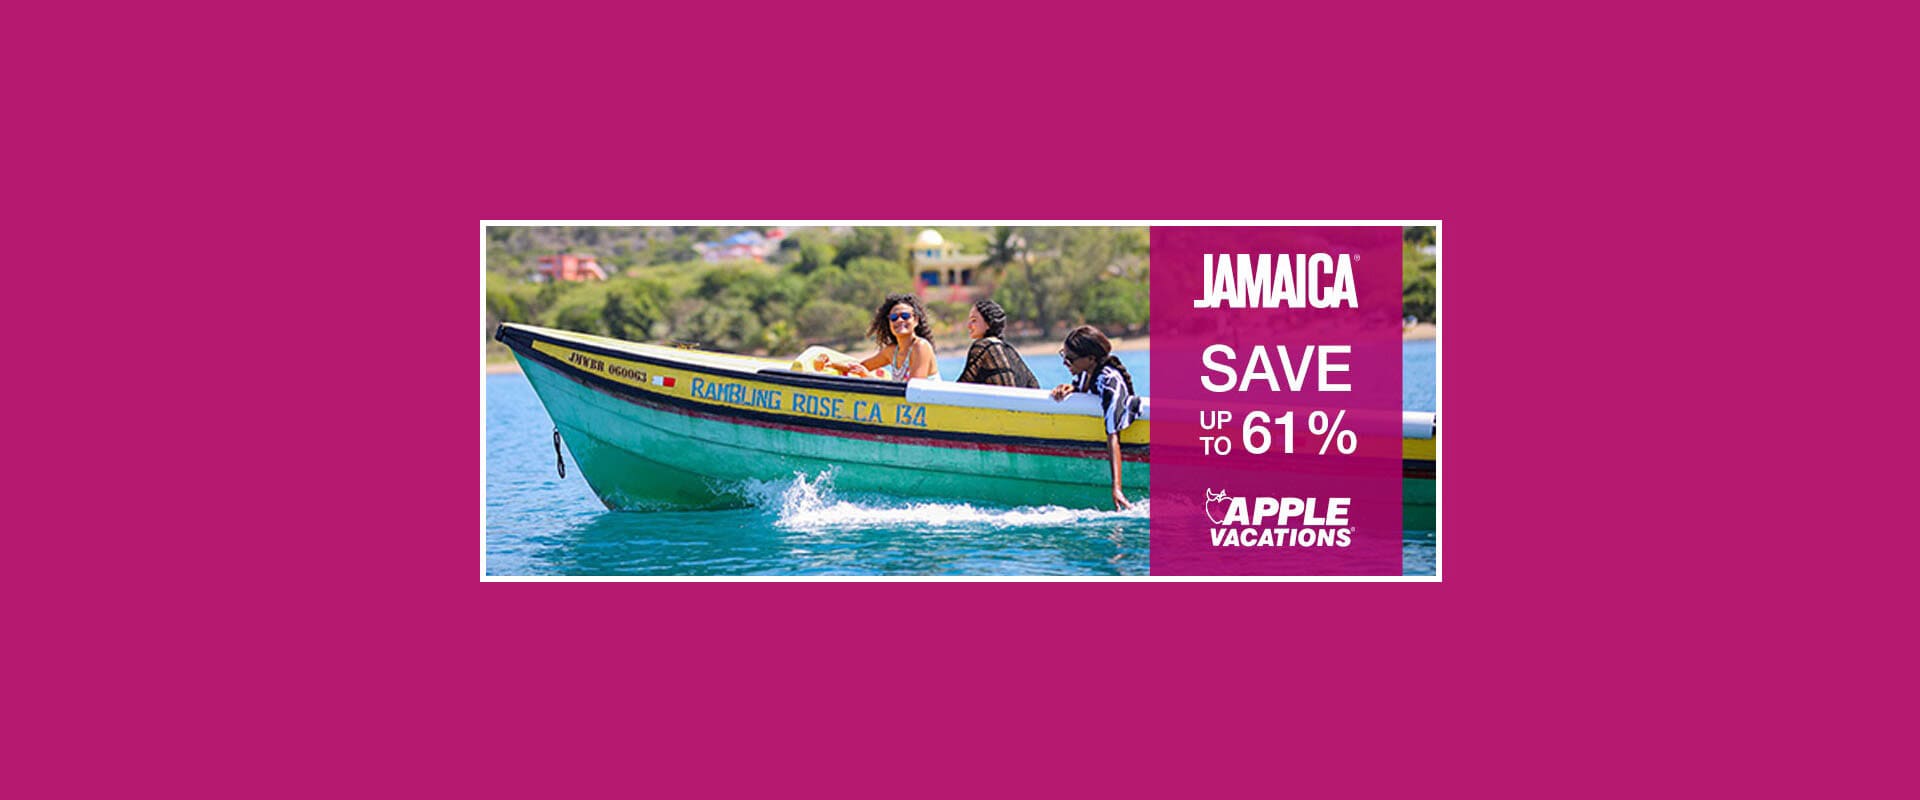 Jamaica Apple Vacations